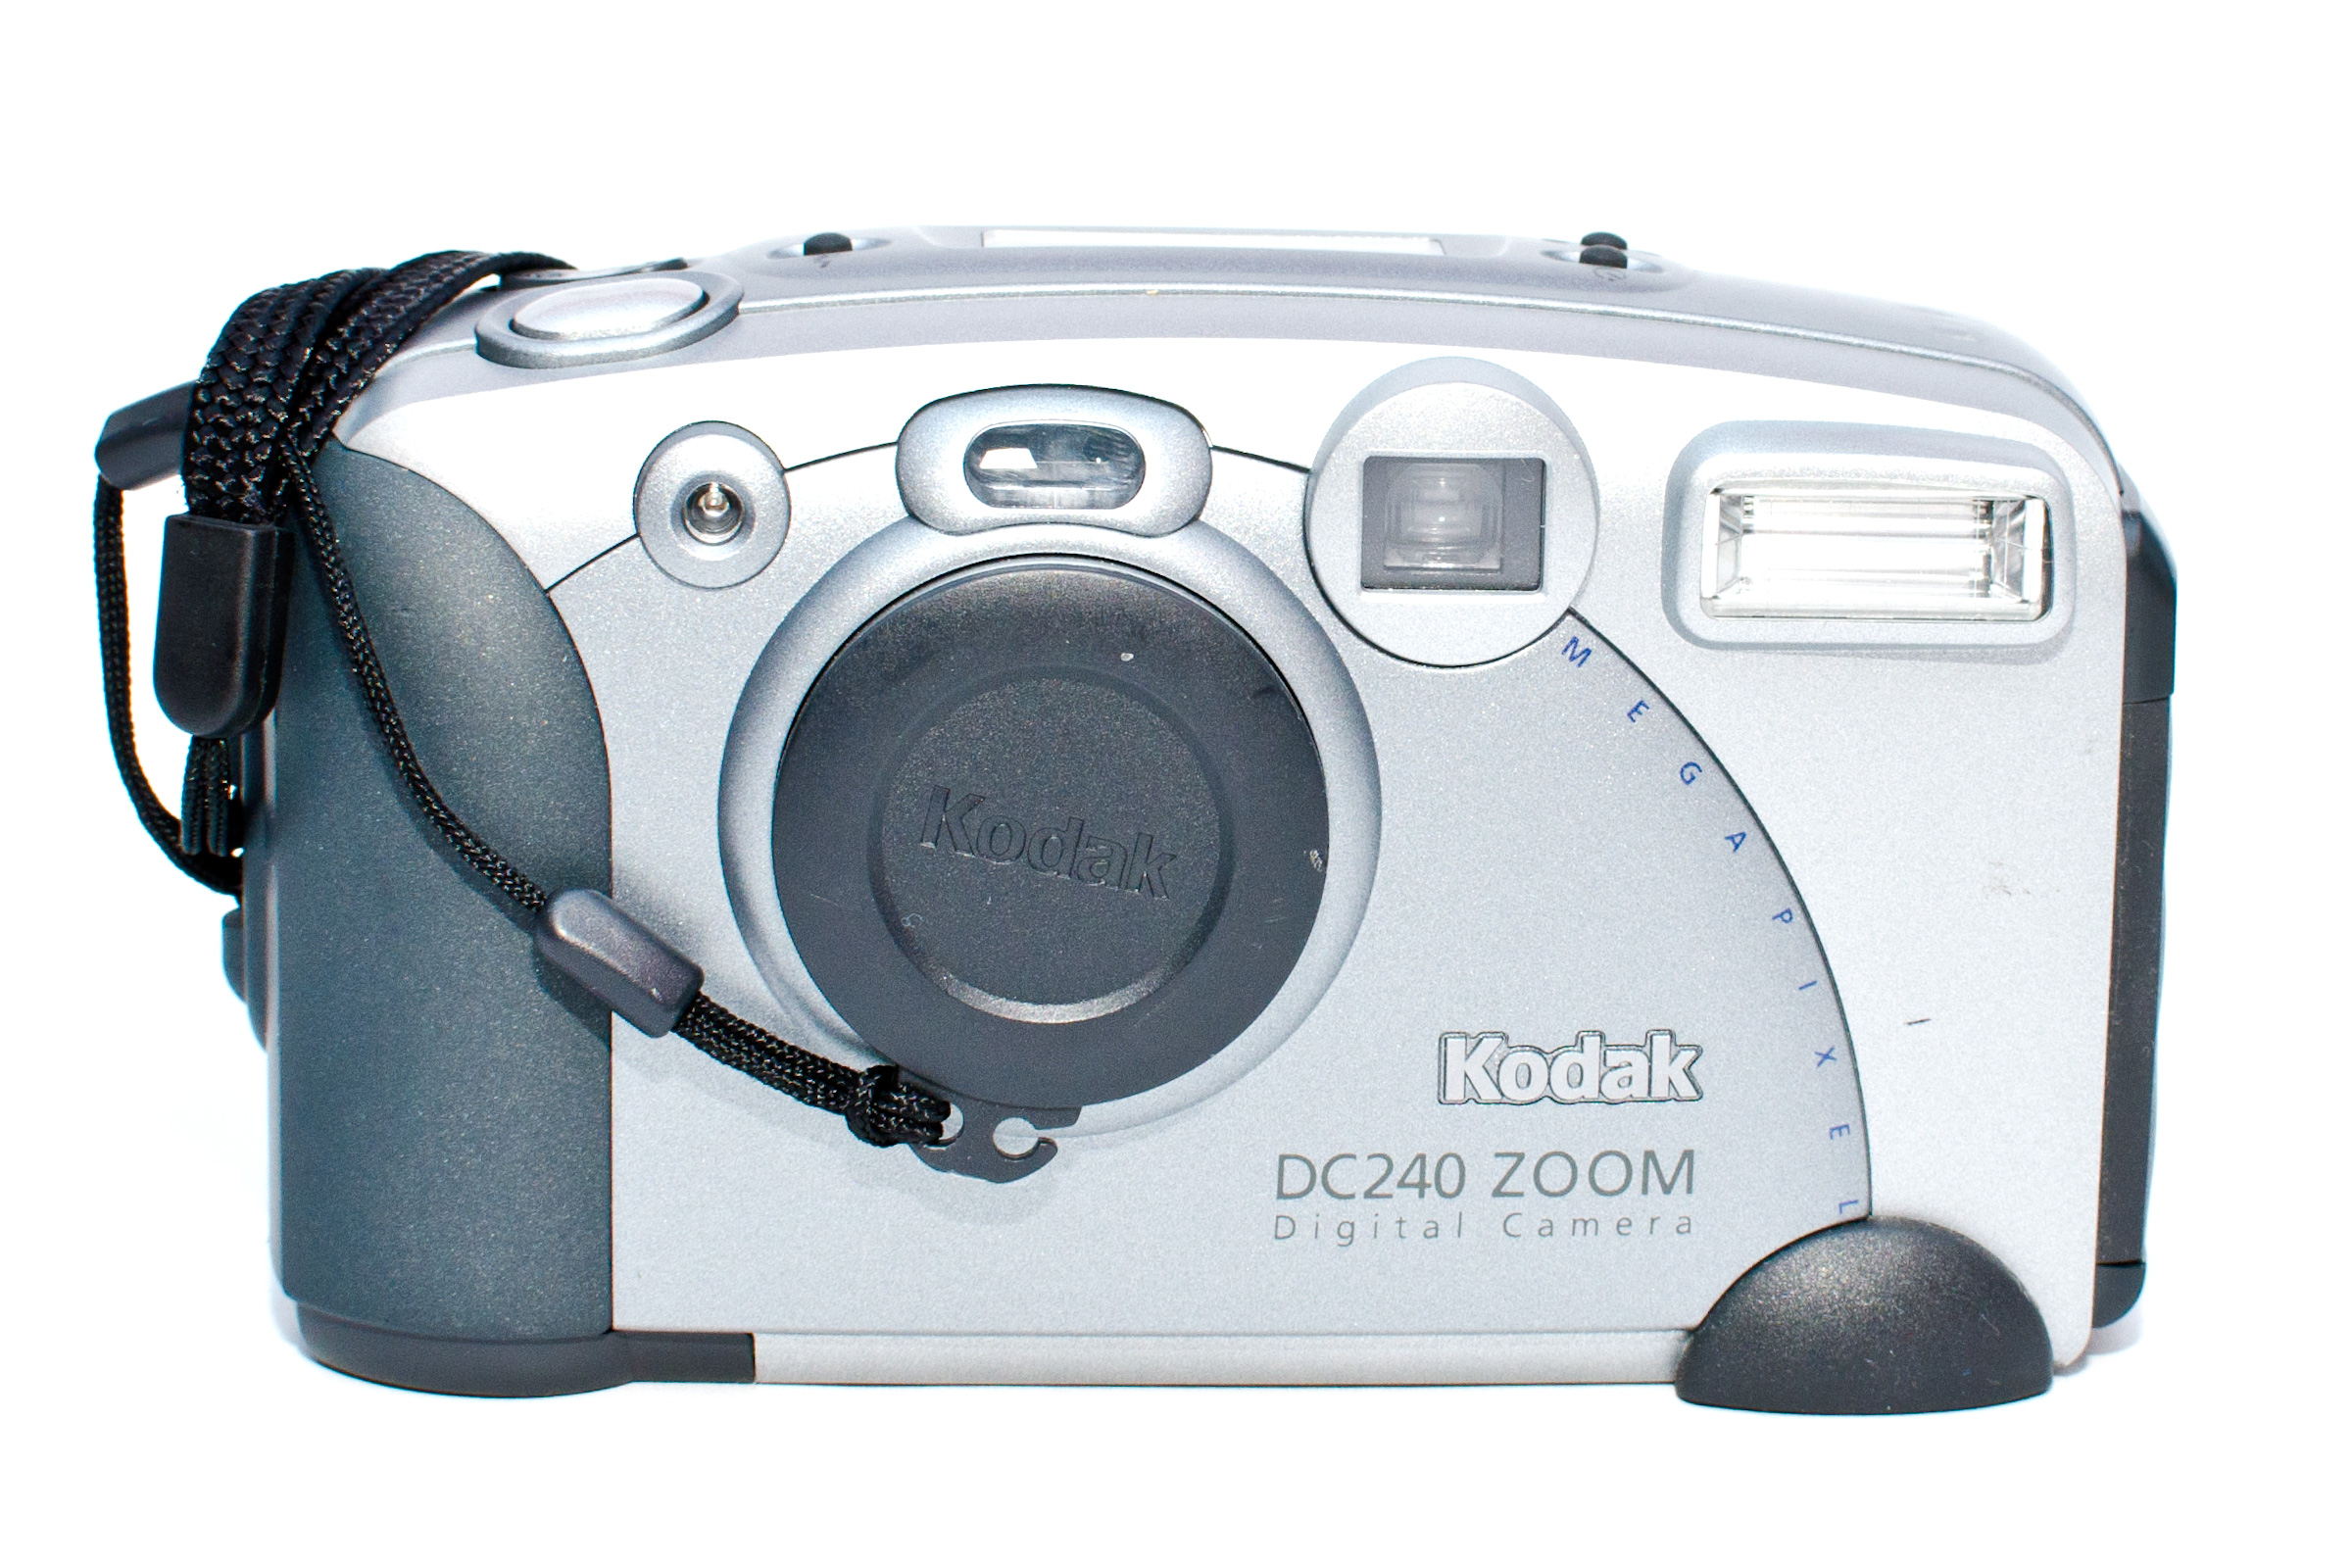 Kodak dvc323 digital video camera drivers for mac